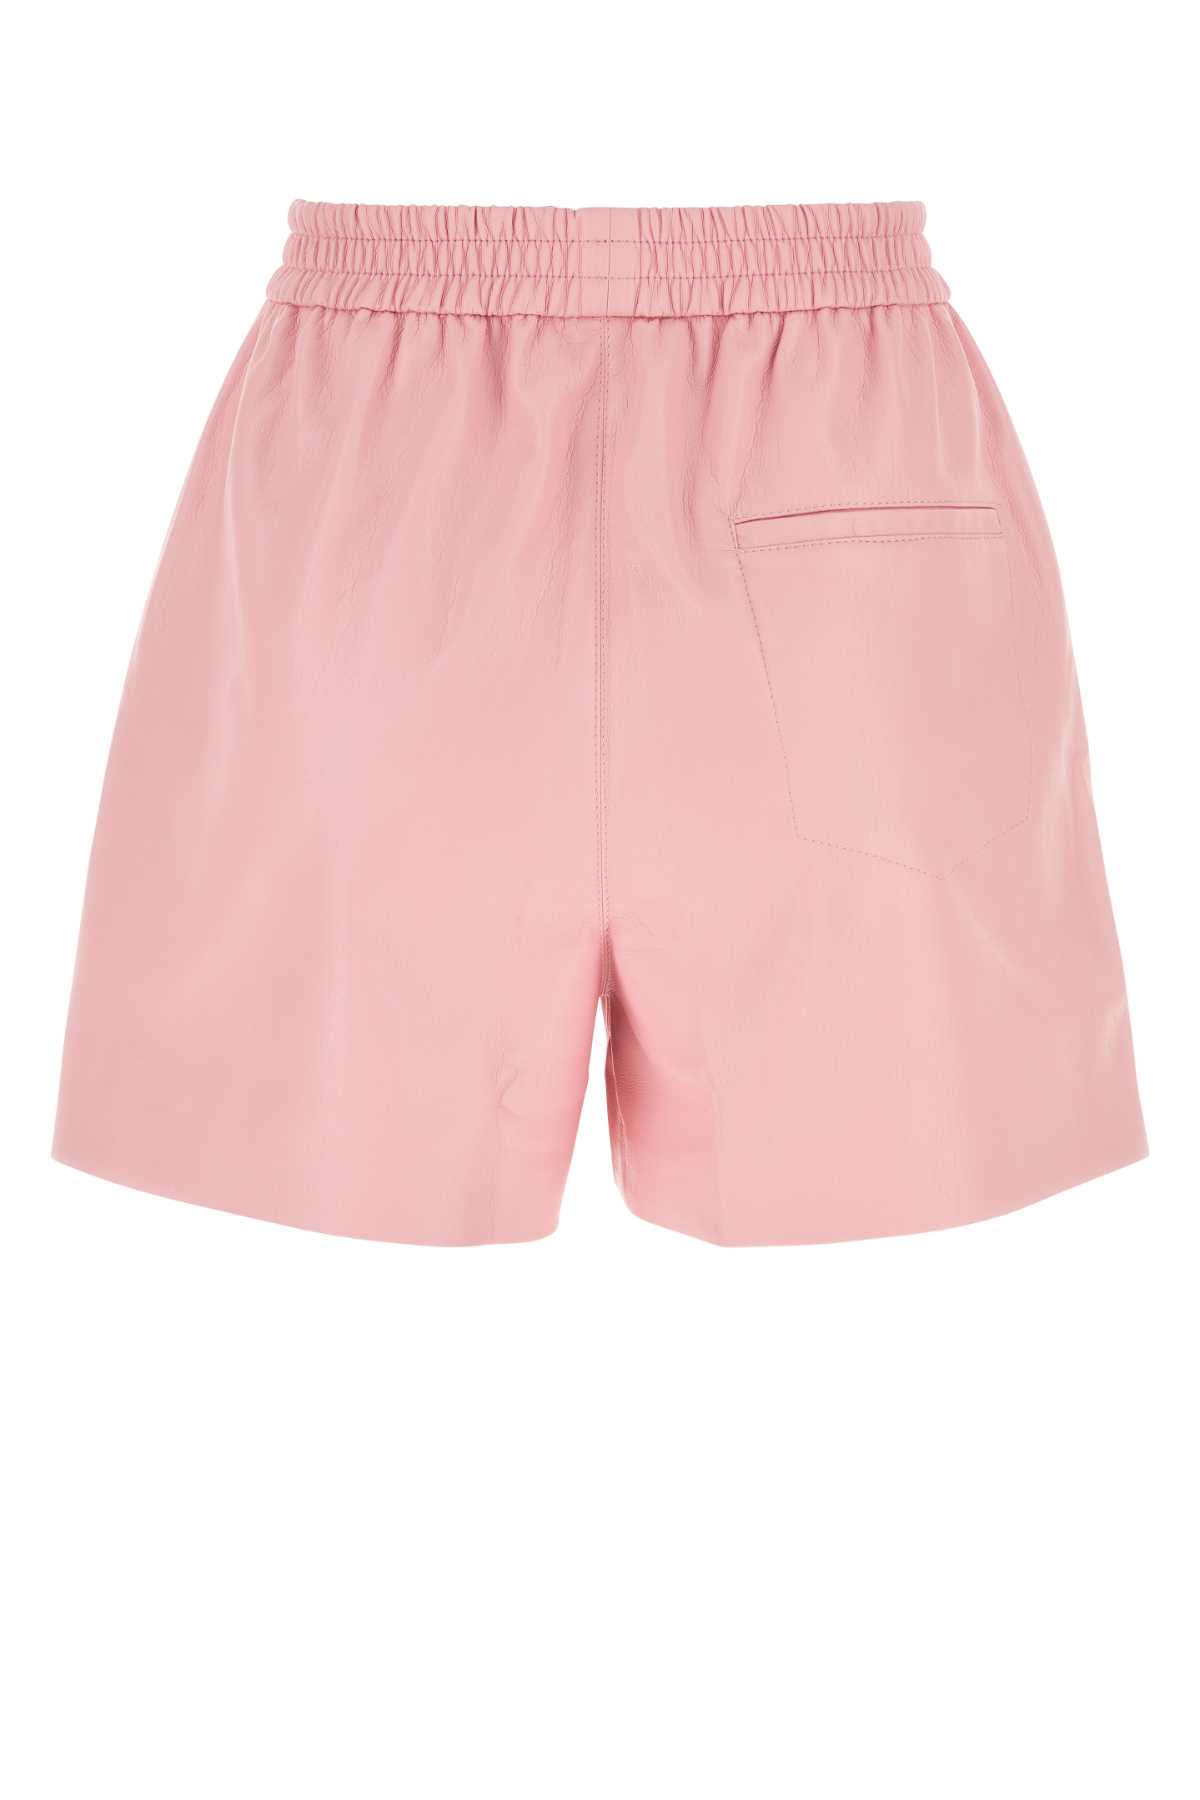 Nanushka Pink Synthetic Leather Brenna Shorts